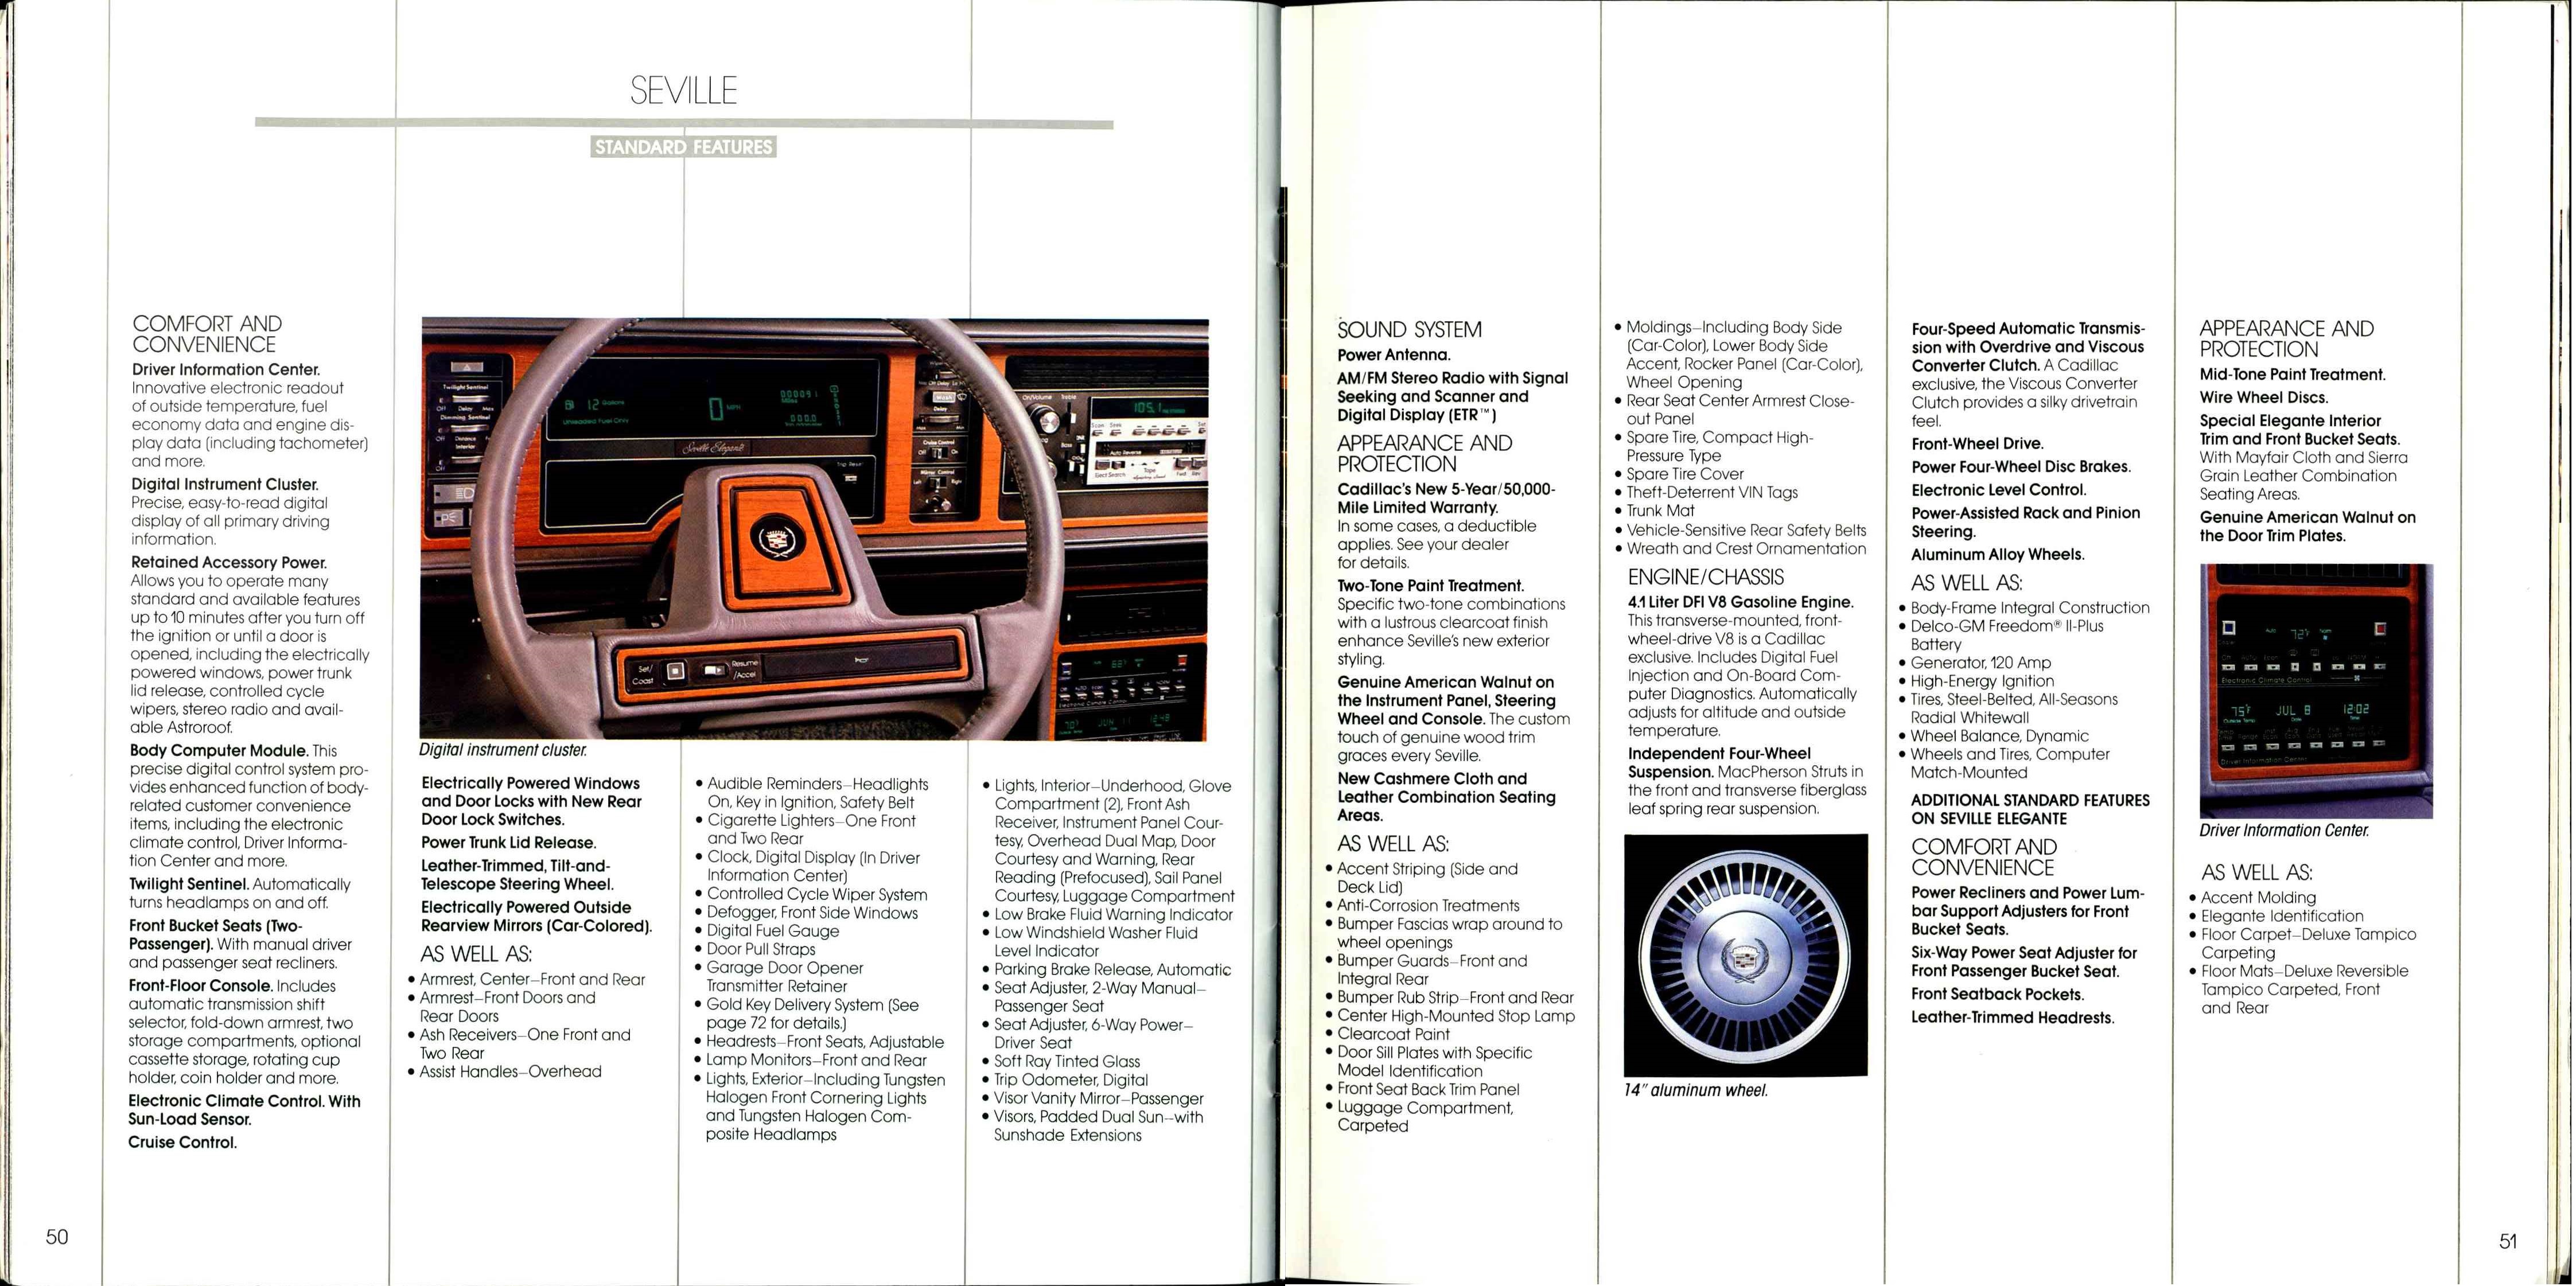 1987 Cadillac Full Line Prestige Brochure 50-51